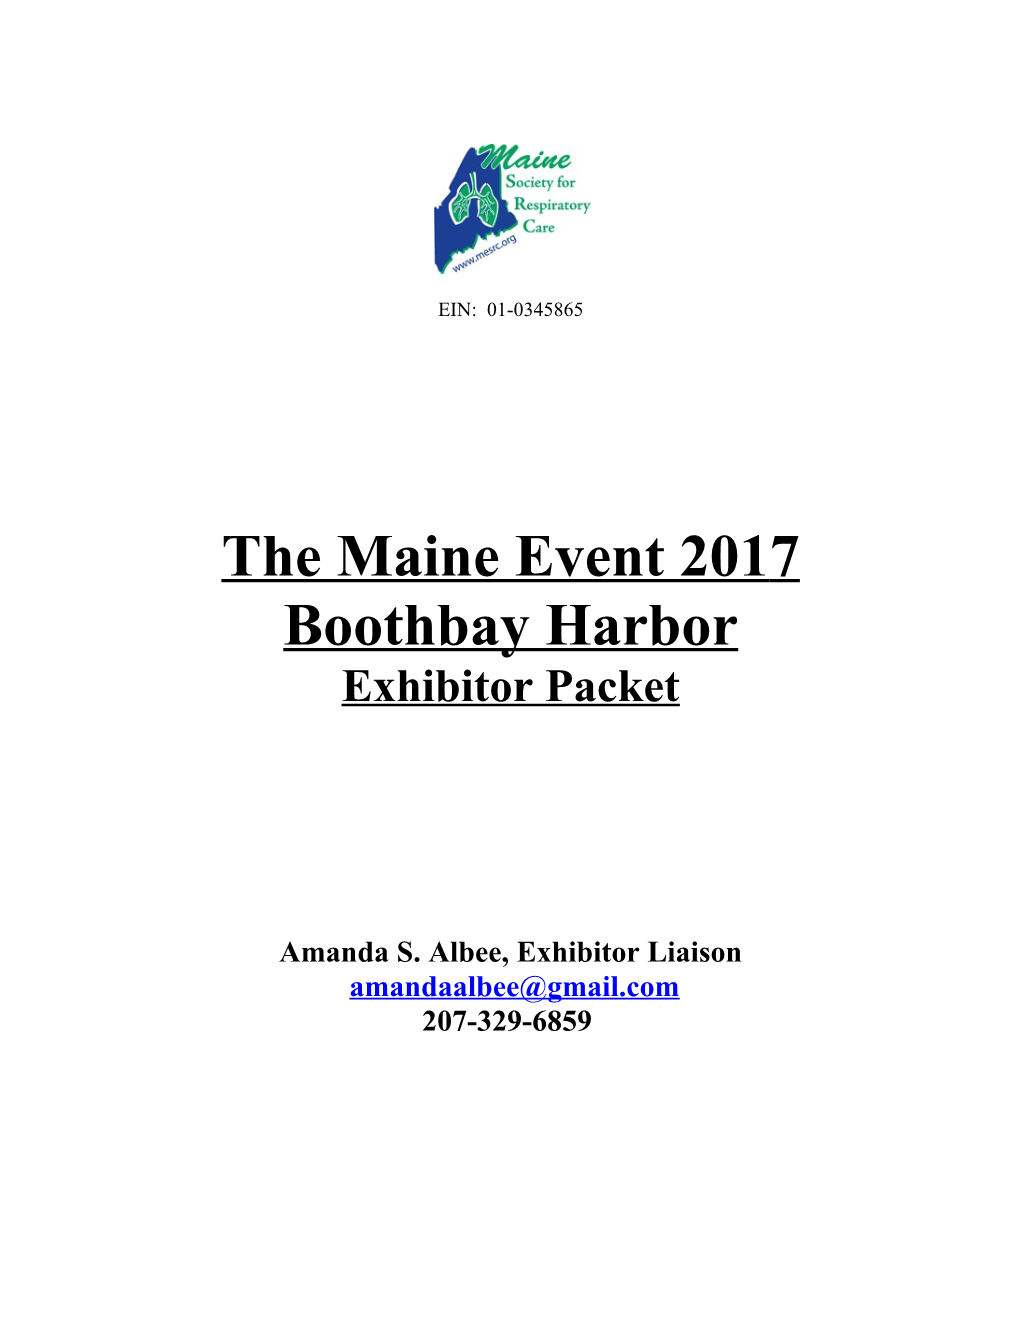 The Maine Event 2017 Boothbayharbor Exhibitor Packet Amanda S. Albee, Exhibitor Liaison